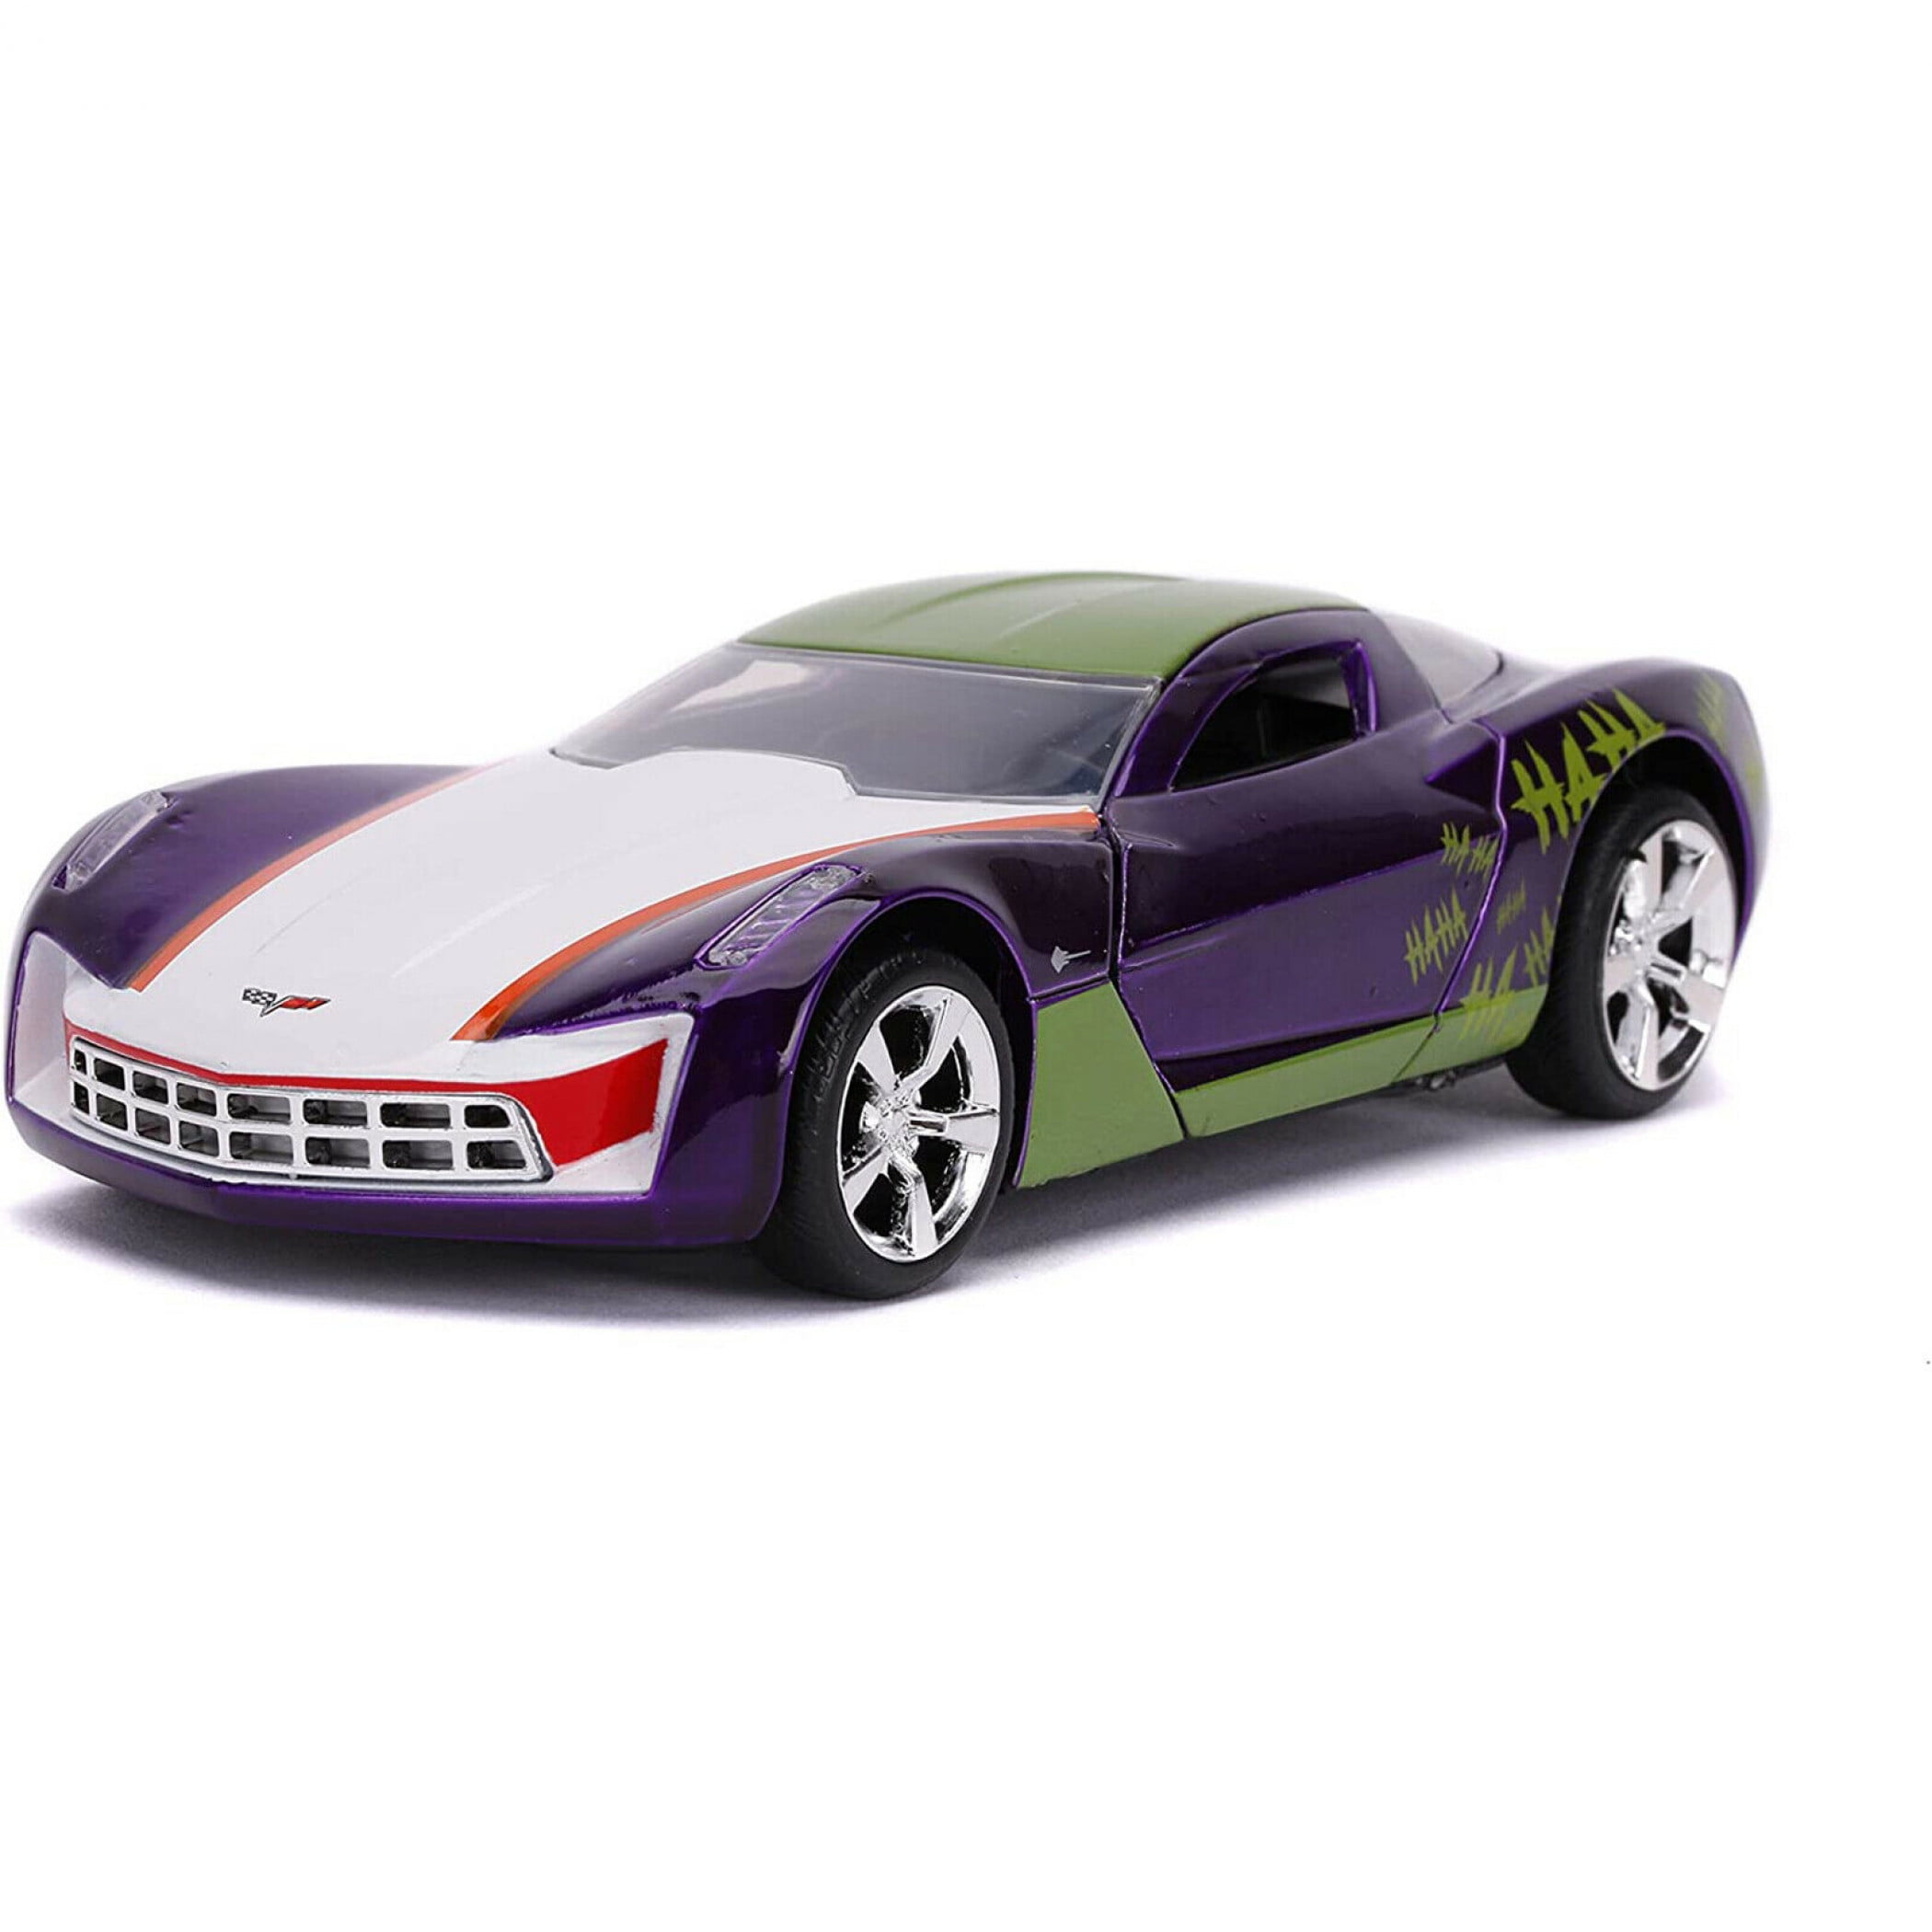 Batman Joker 2009 Corvette 1:24 Scale Hollywood Ride jada die cast 